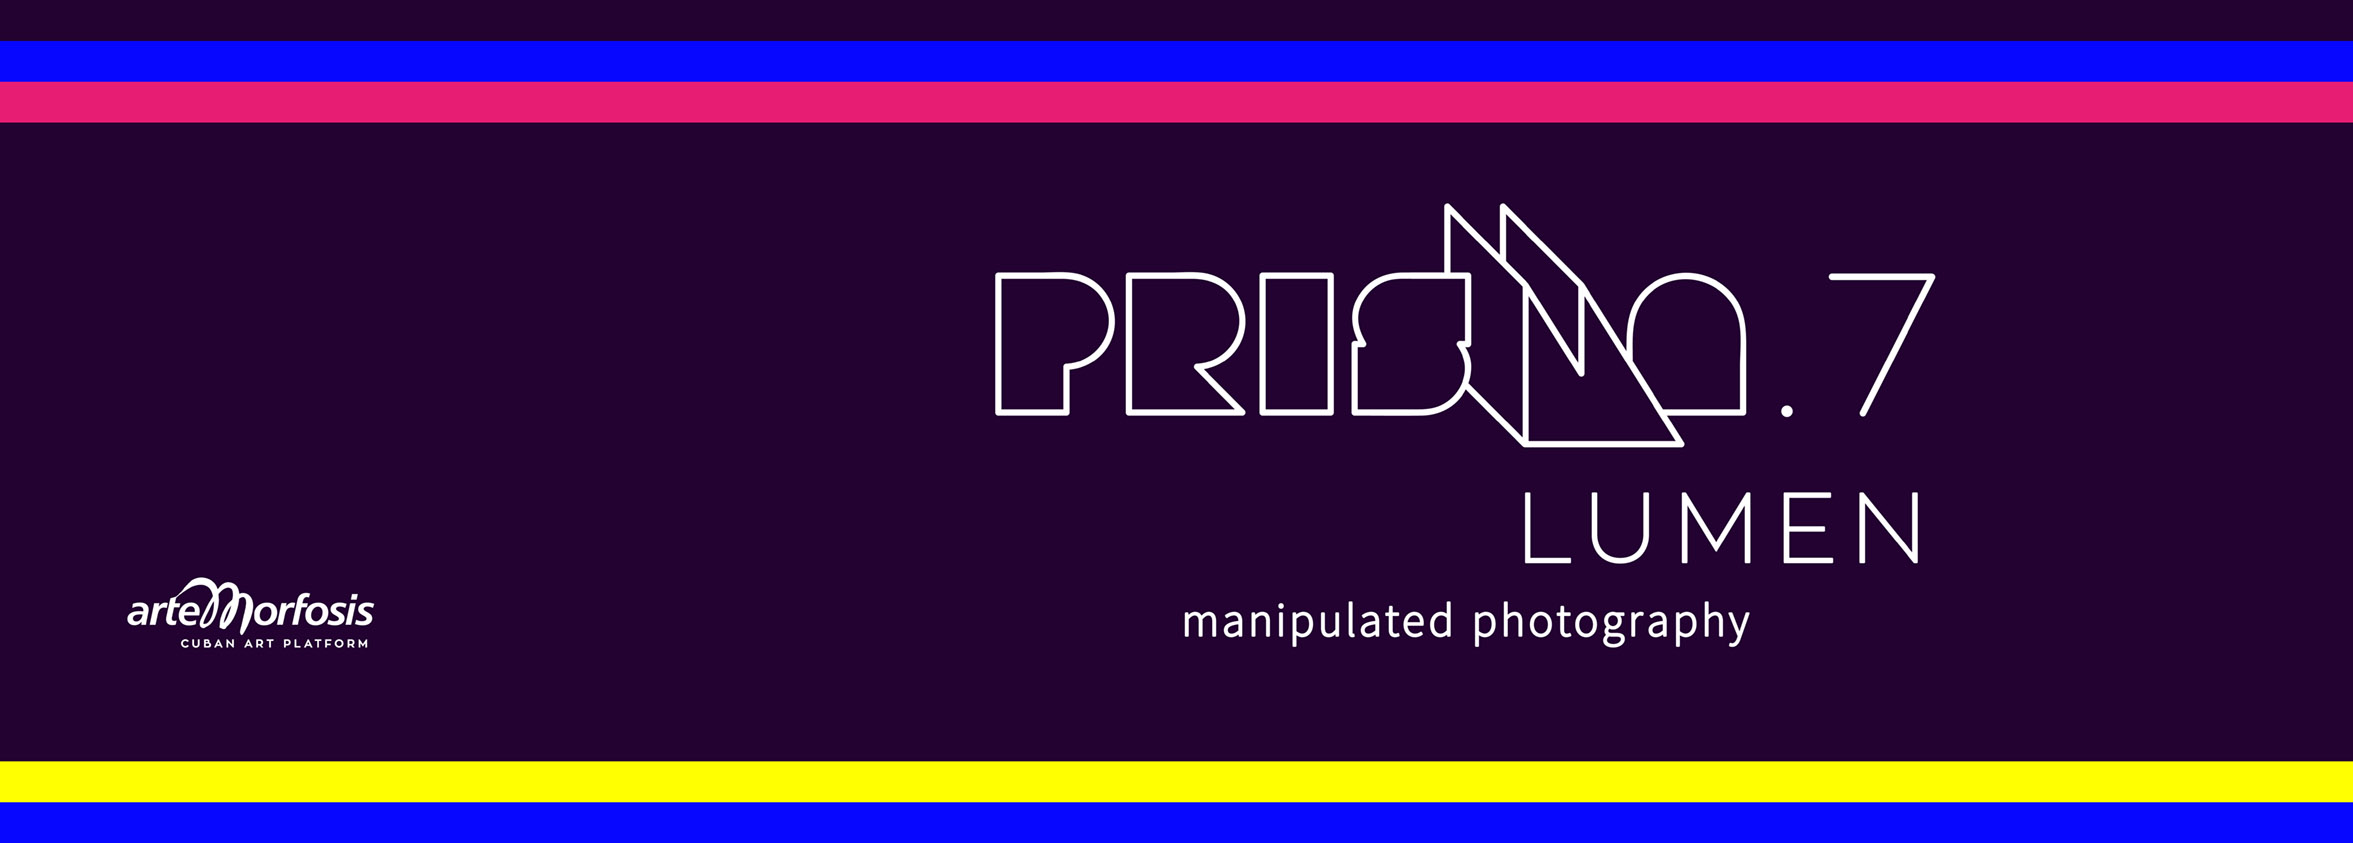 PRISMA 7 – LUMEN